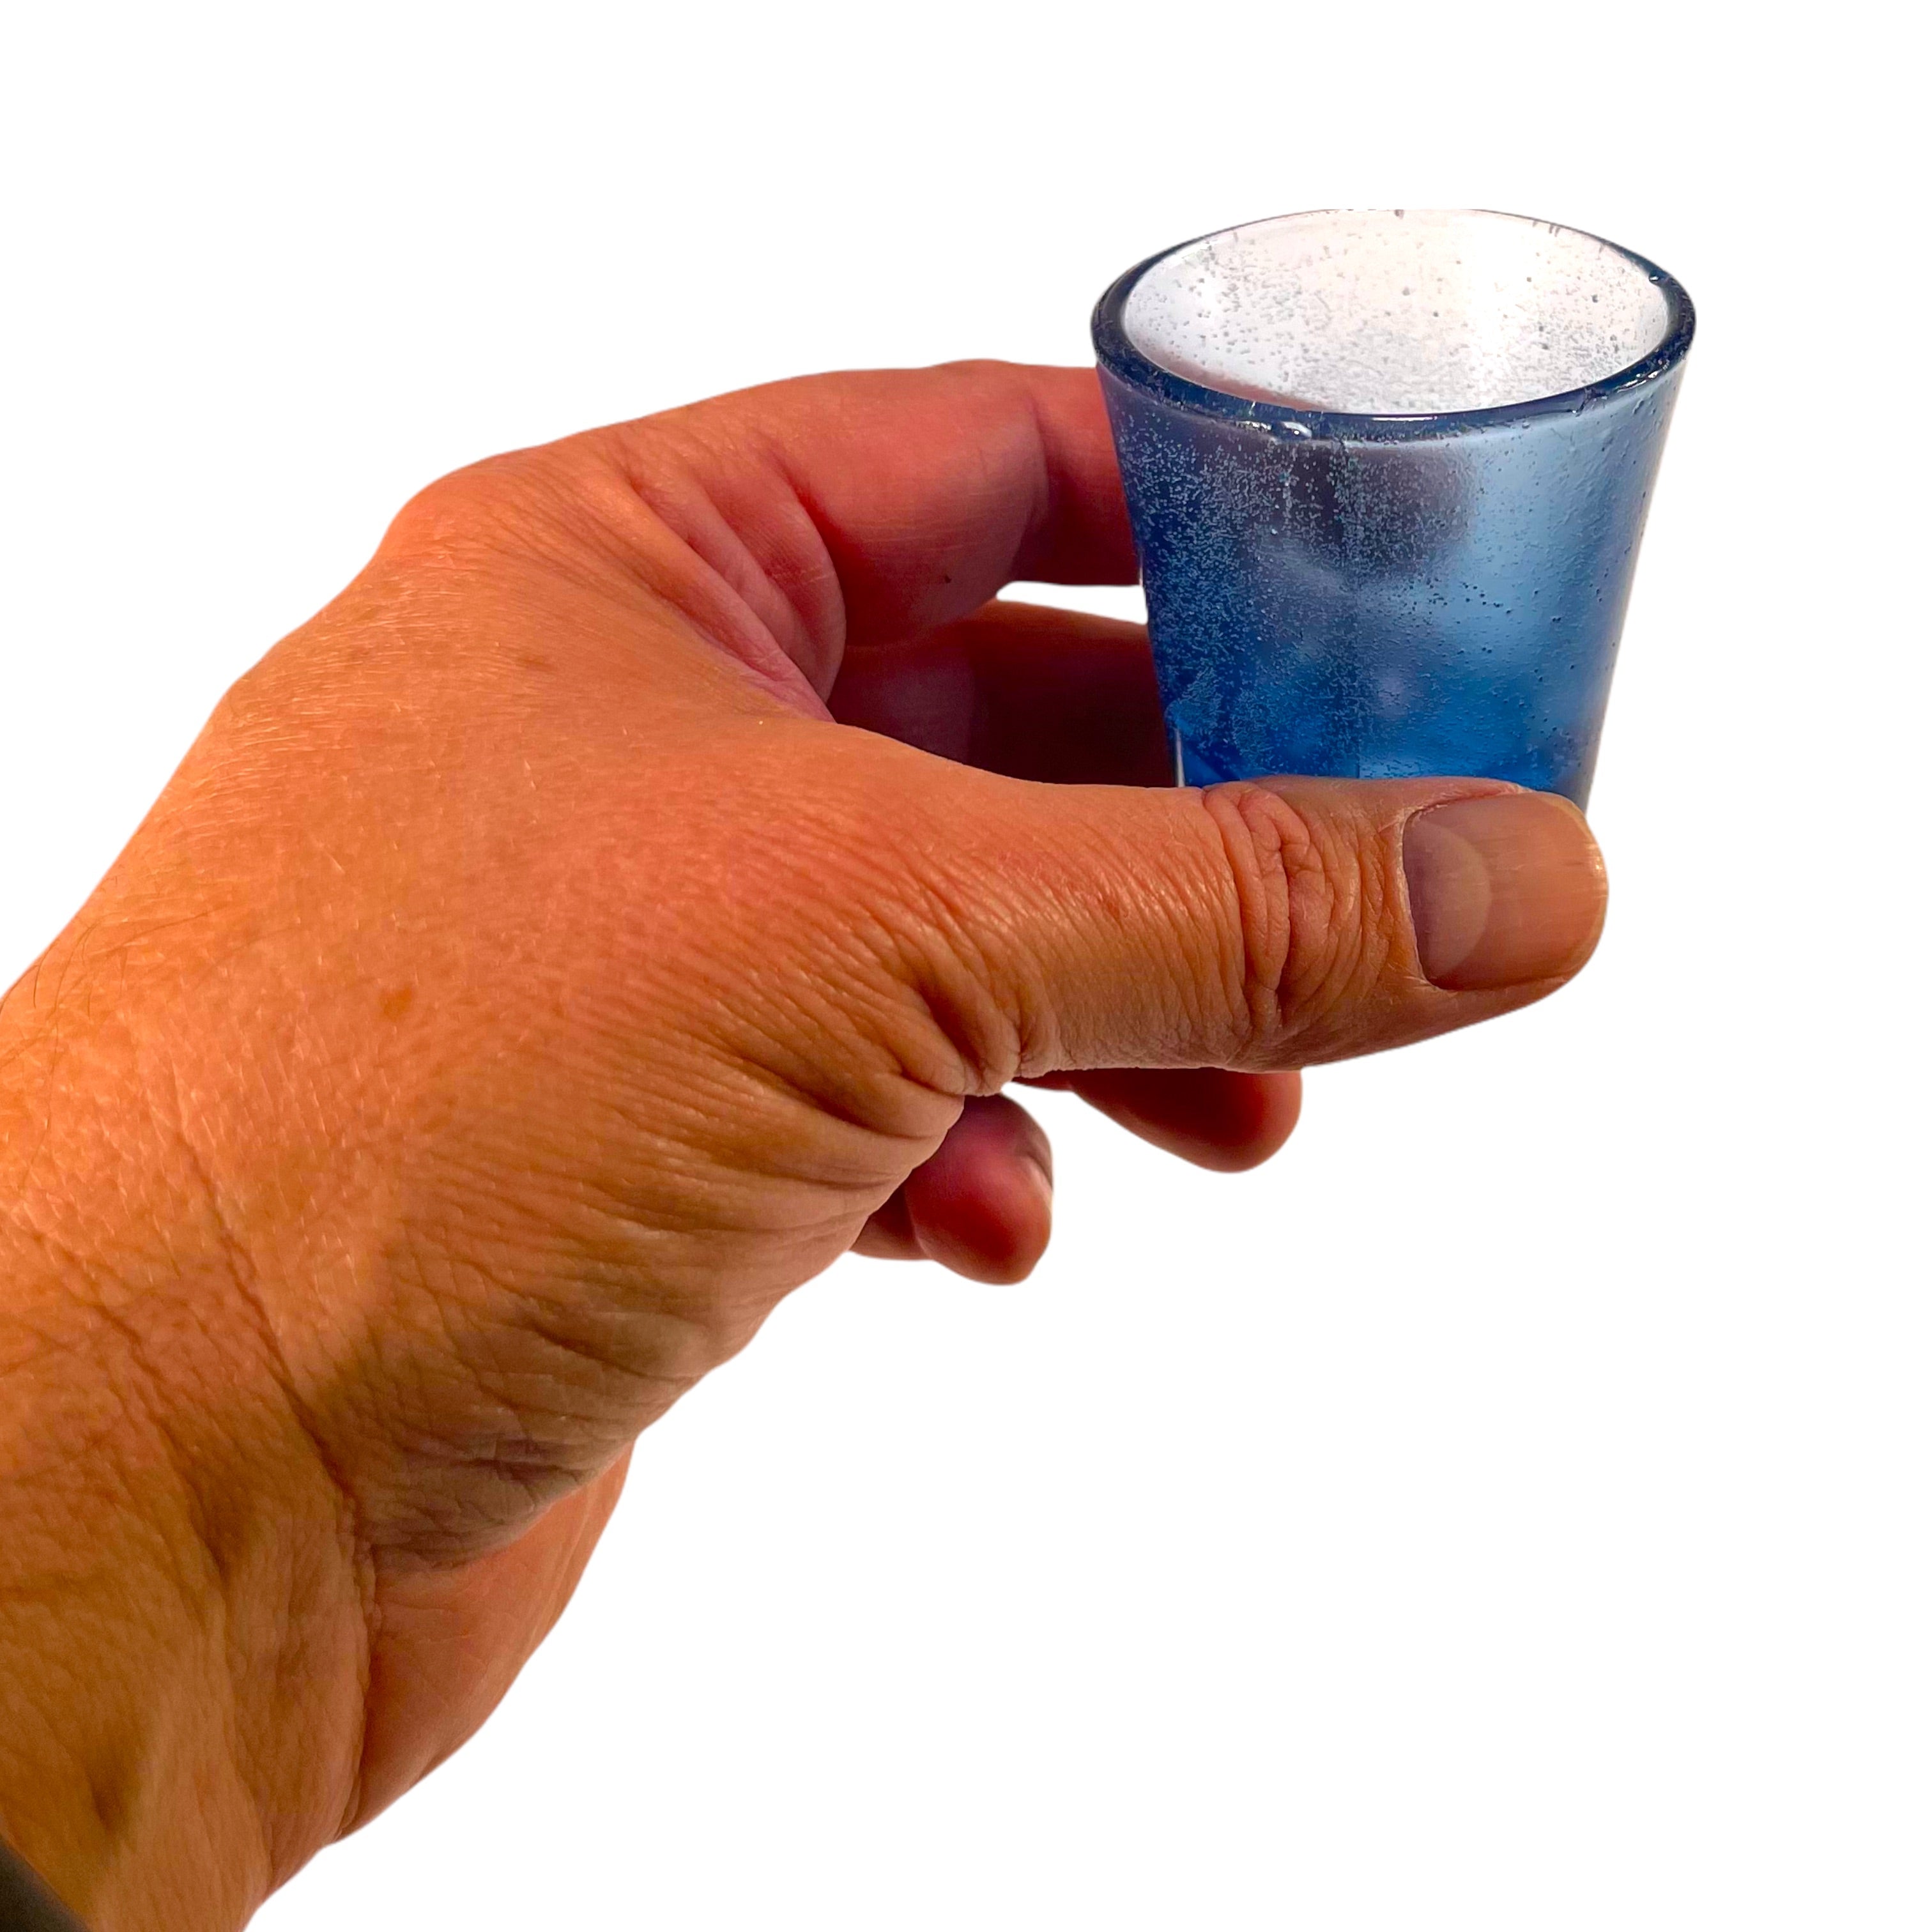 SMASHProps Breakaway Small Whiskey Shot Glass - LIGHT BLUE translucent - Light Blue Translucent